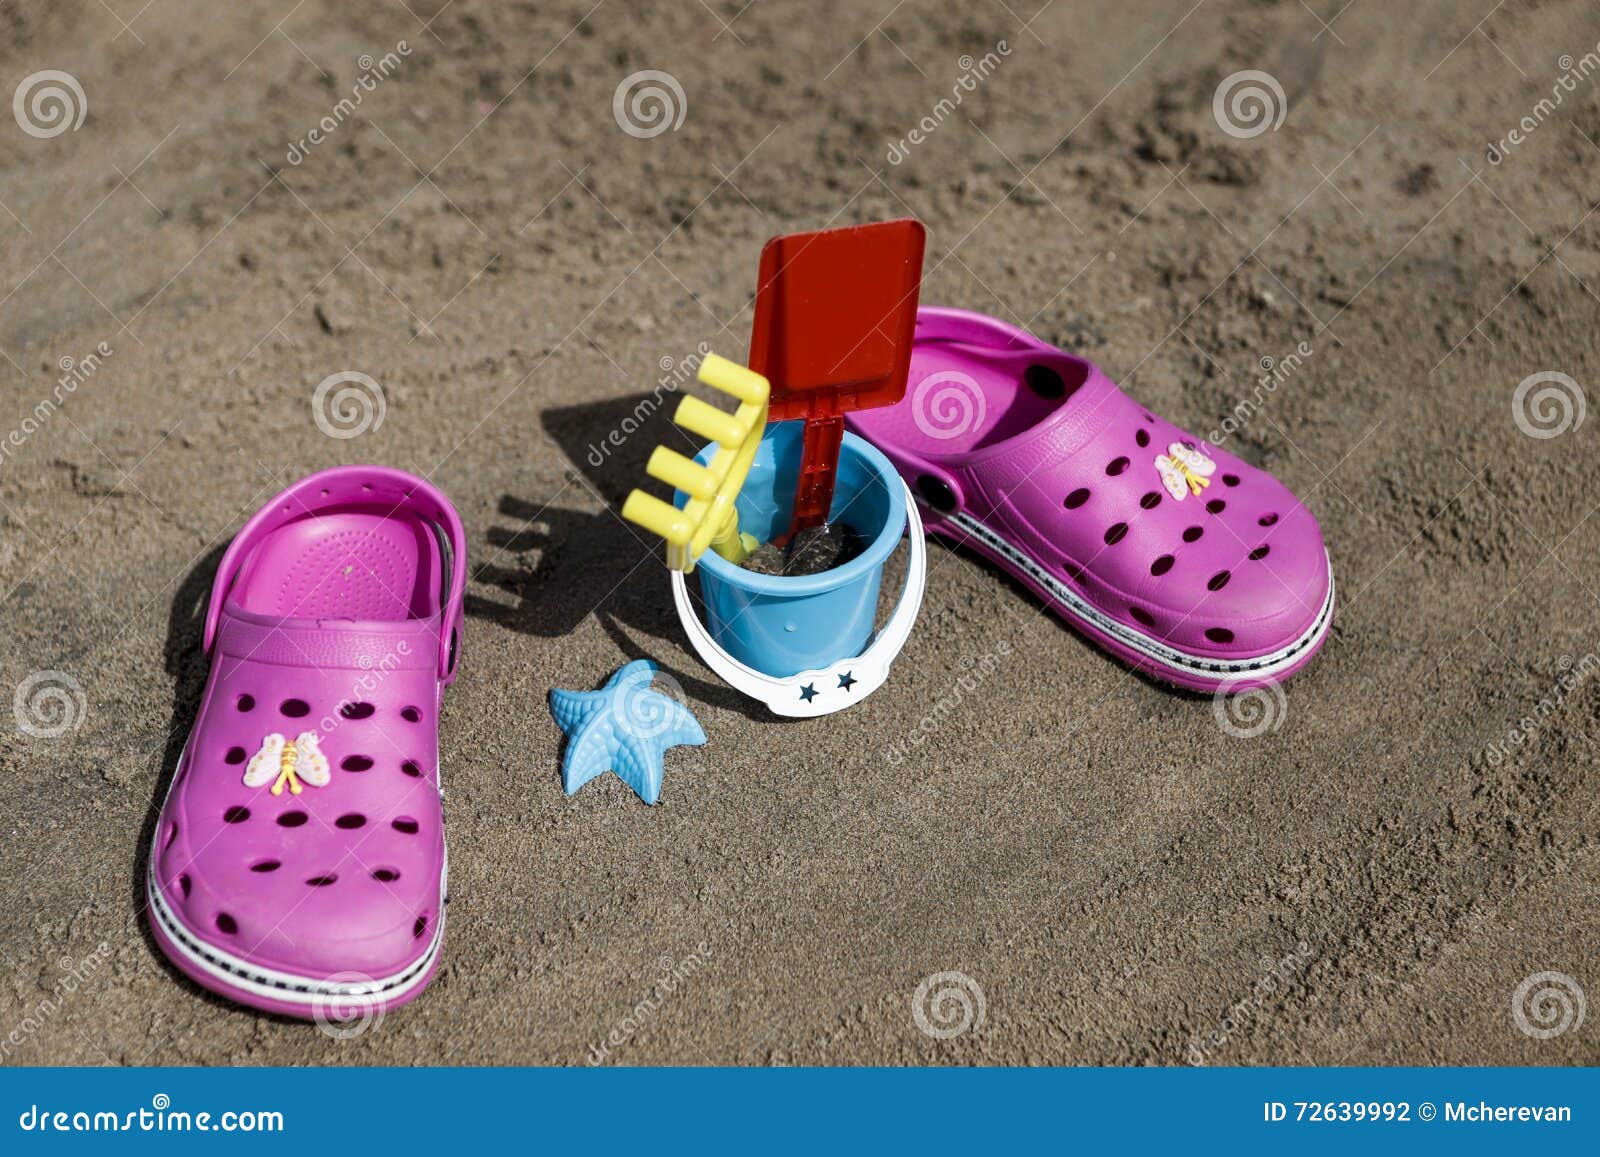 Pink Beach Crocs and Blue Sand Toys on Sandy Beach.Beach Flip Flops in ...